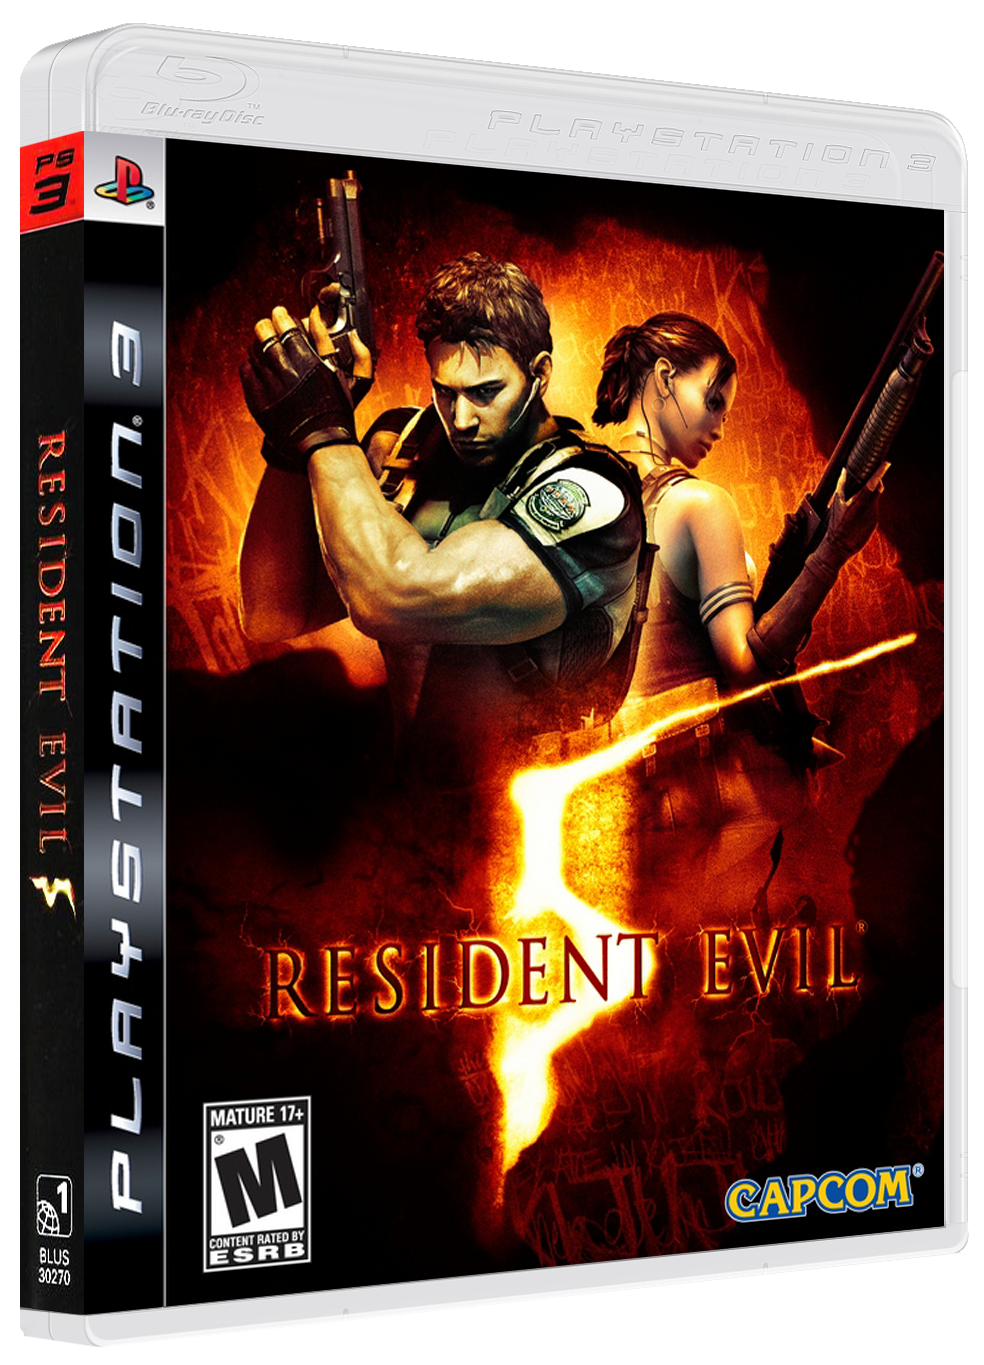 Resident Evil 5 Box Turn.png